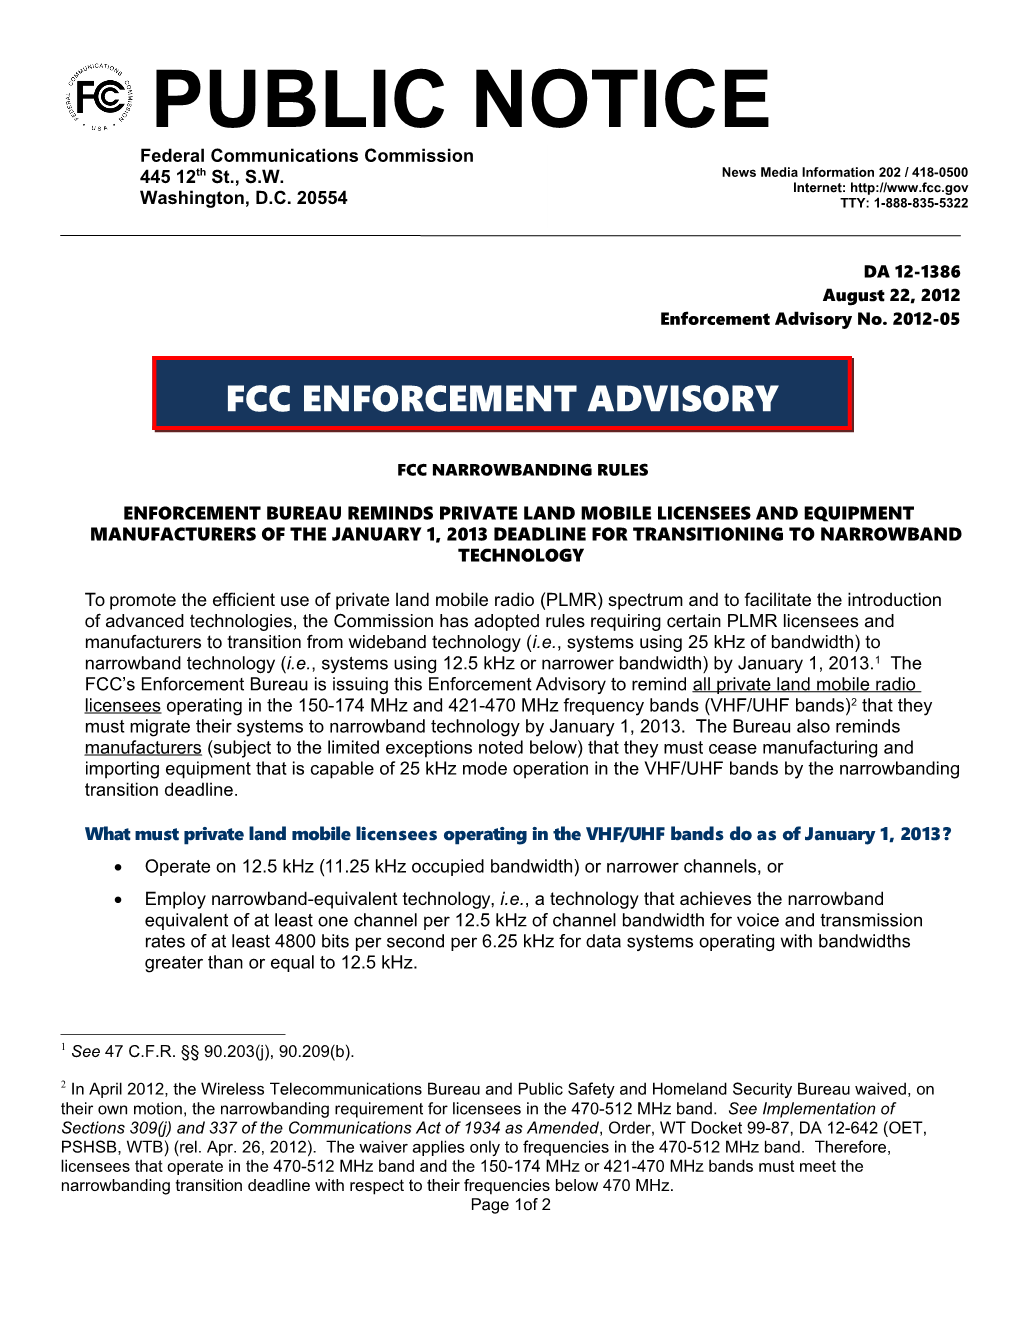 Enforcement Advisory No. 2012-05